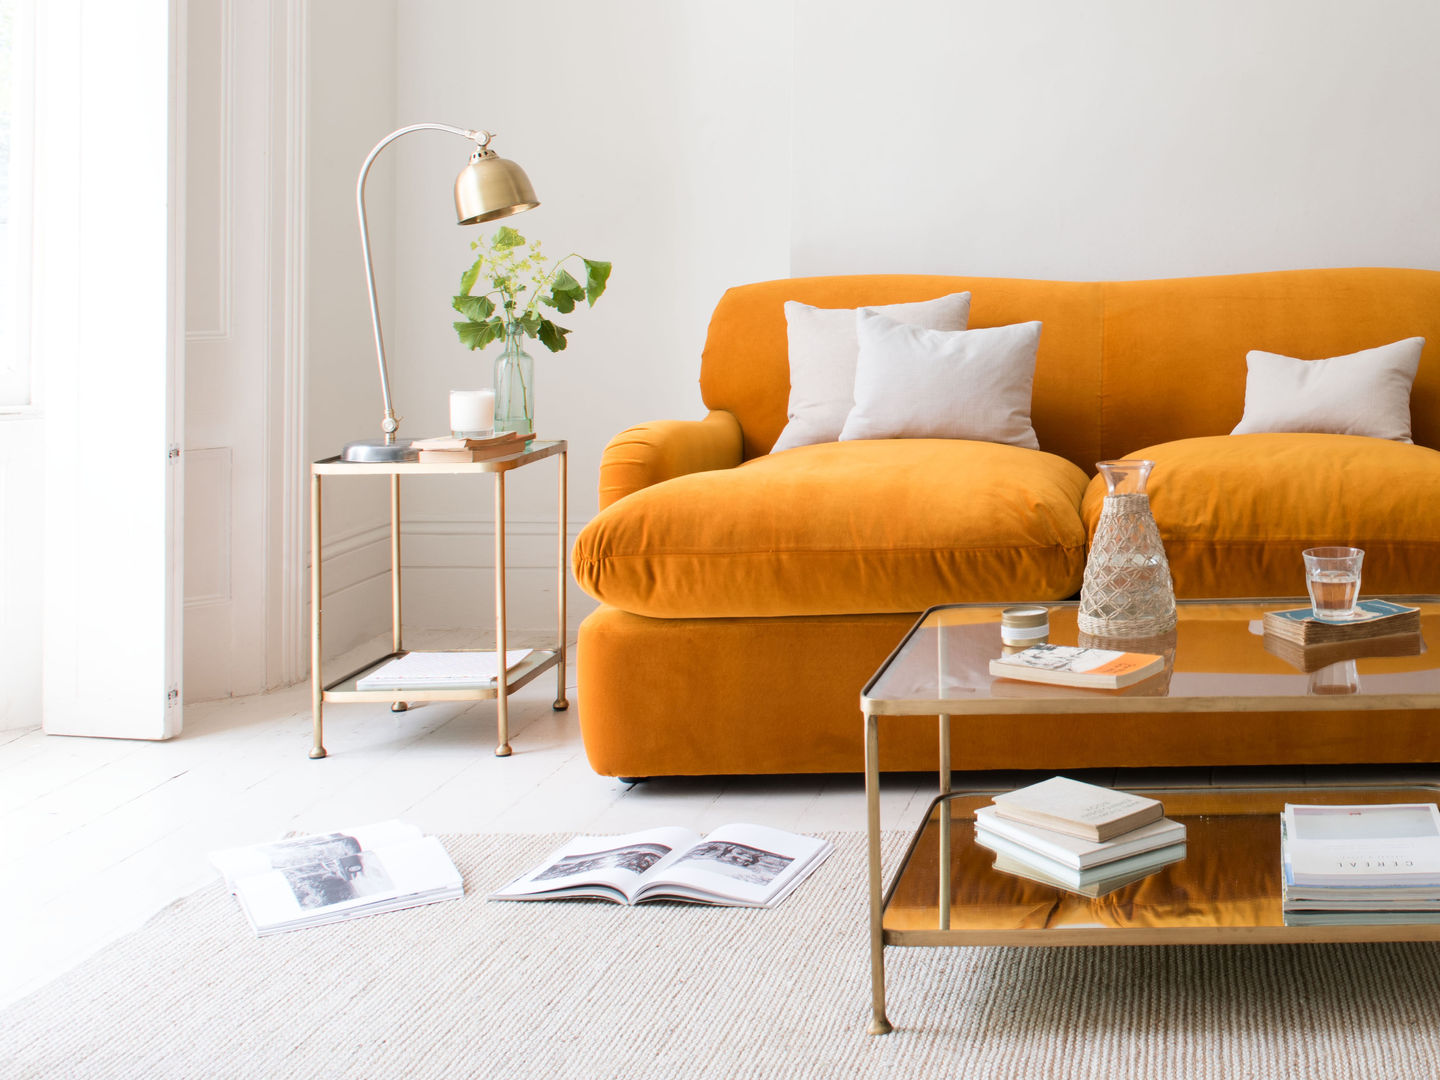 Wonder-Brass Loaf Salas de estar modernas brass,glass,living room,sofa,orange,velvet,home,space